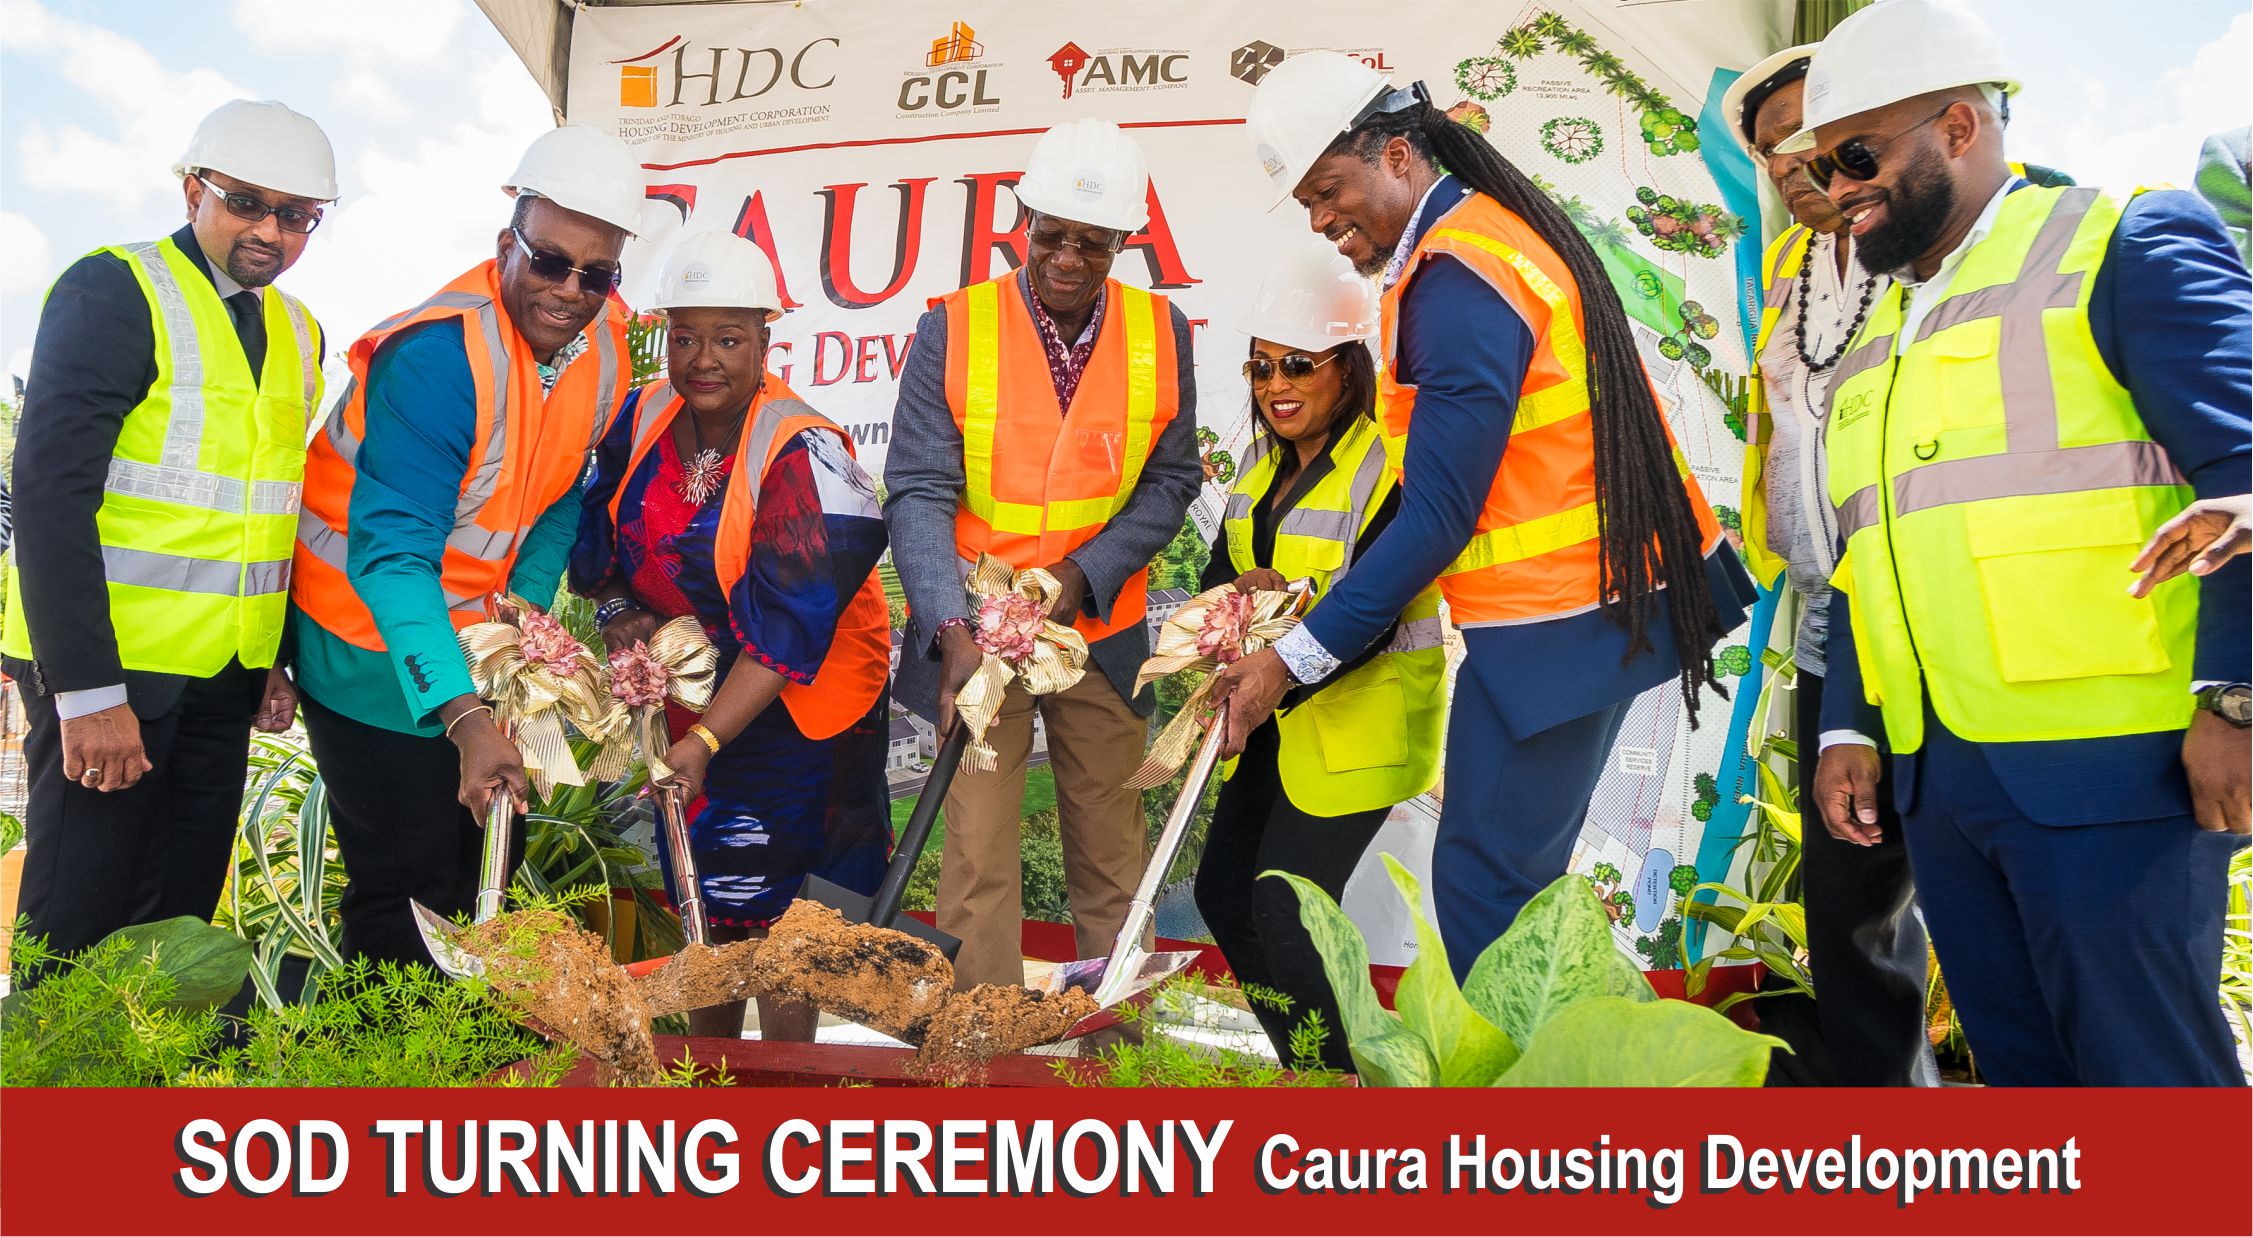 HDC SOD Turning Ceremony: Caura Housing Development